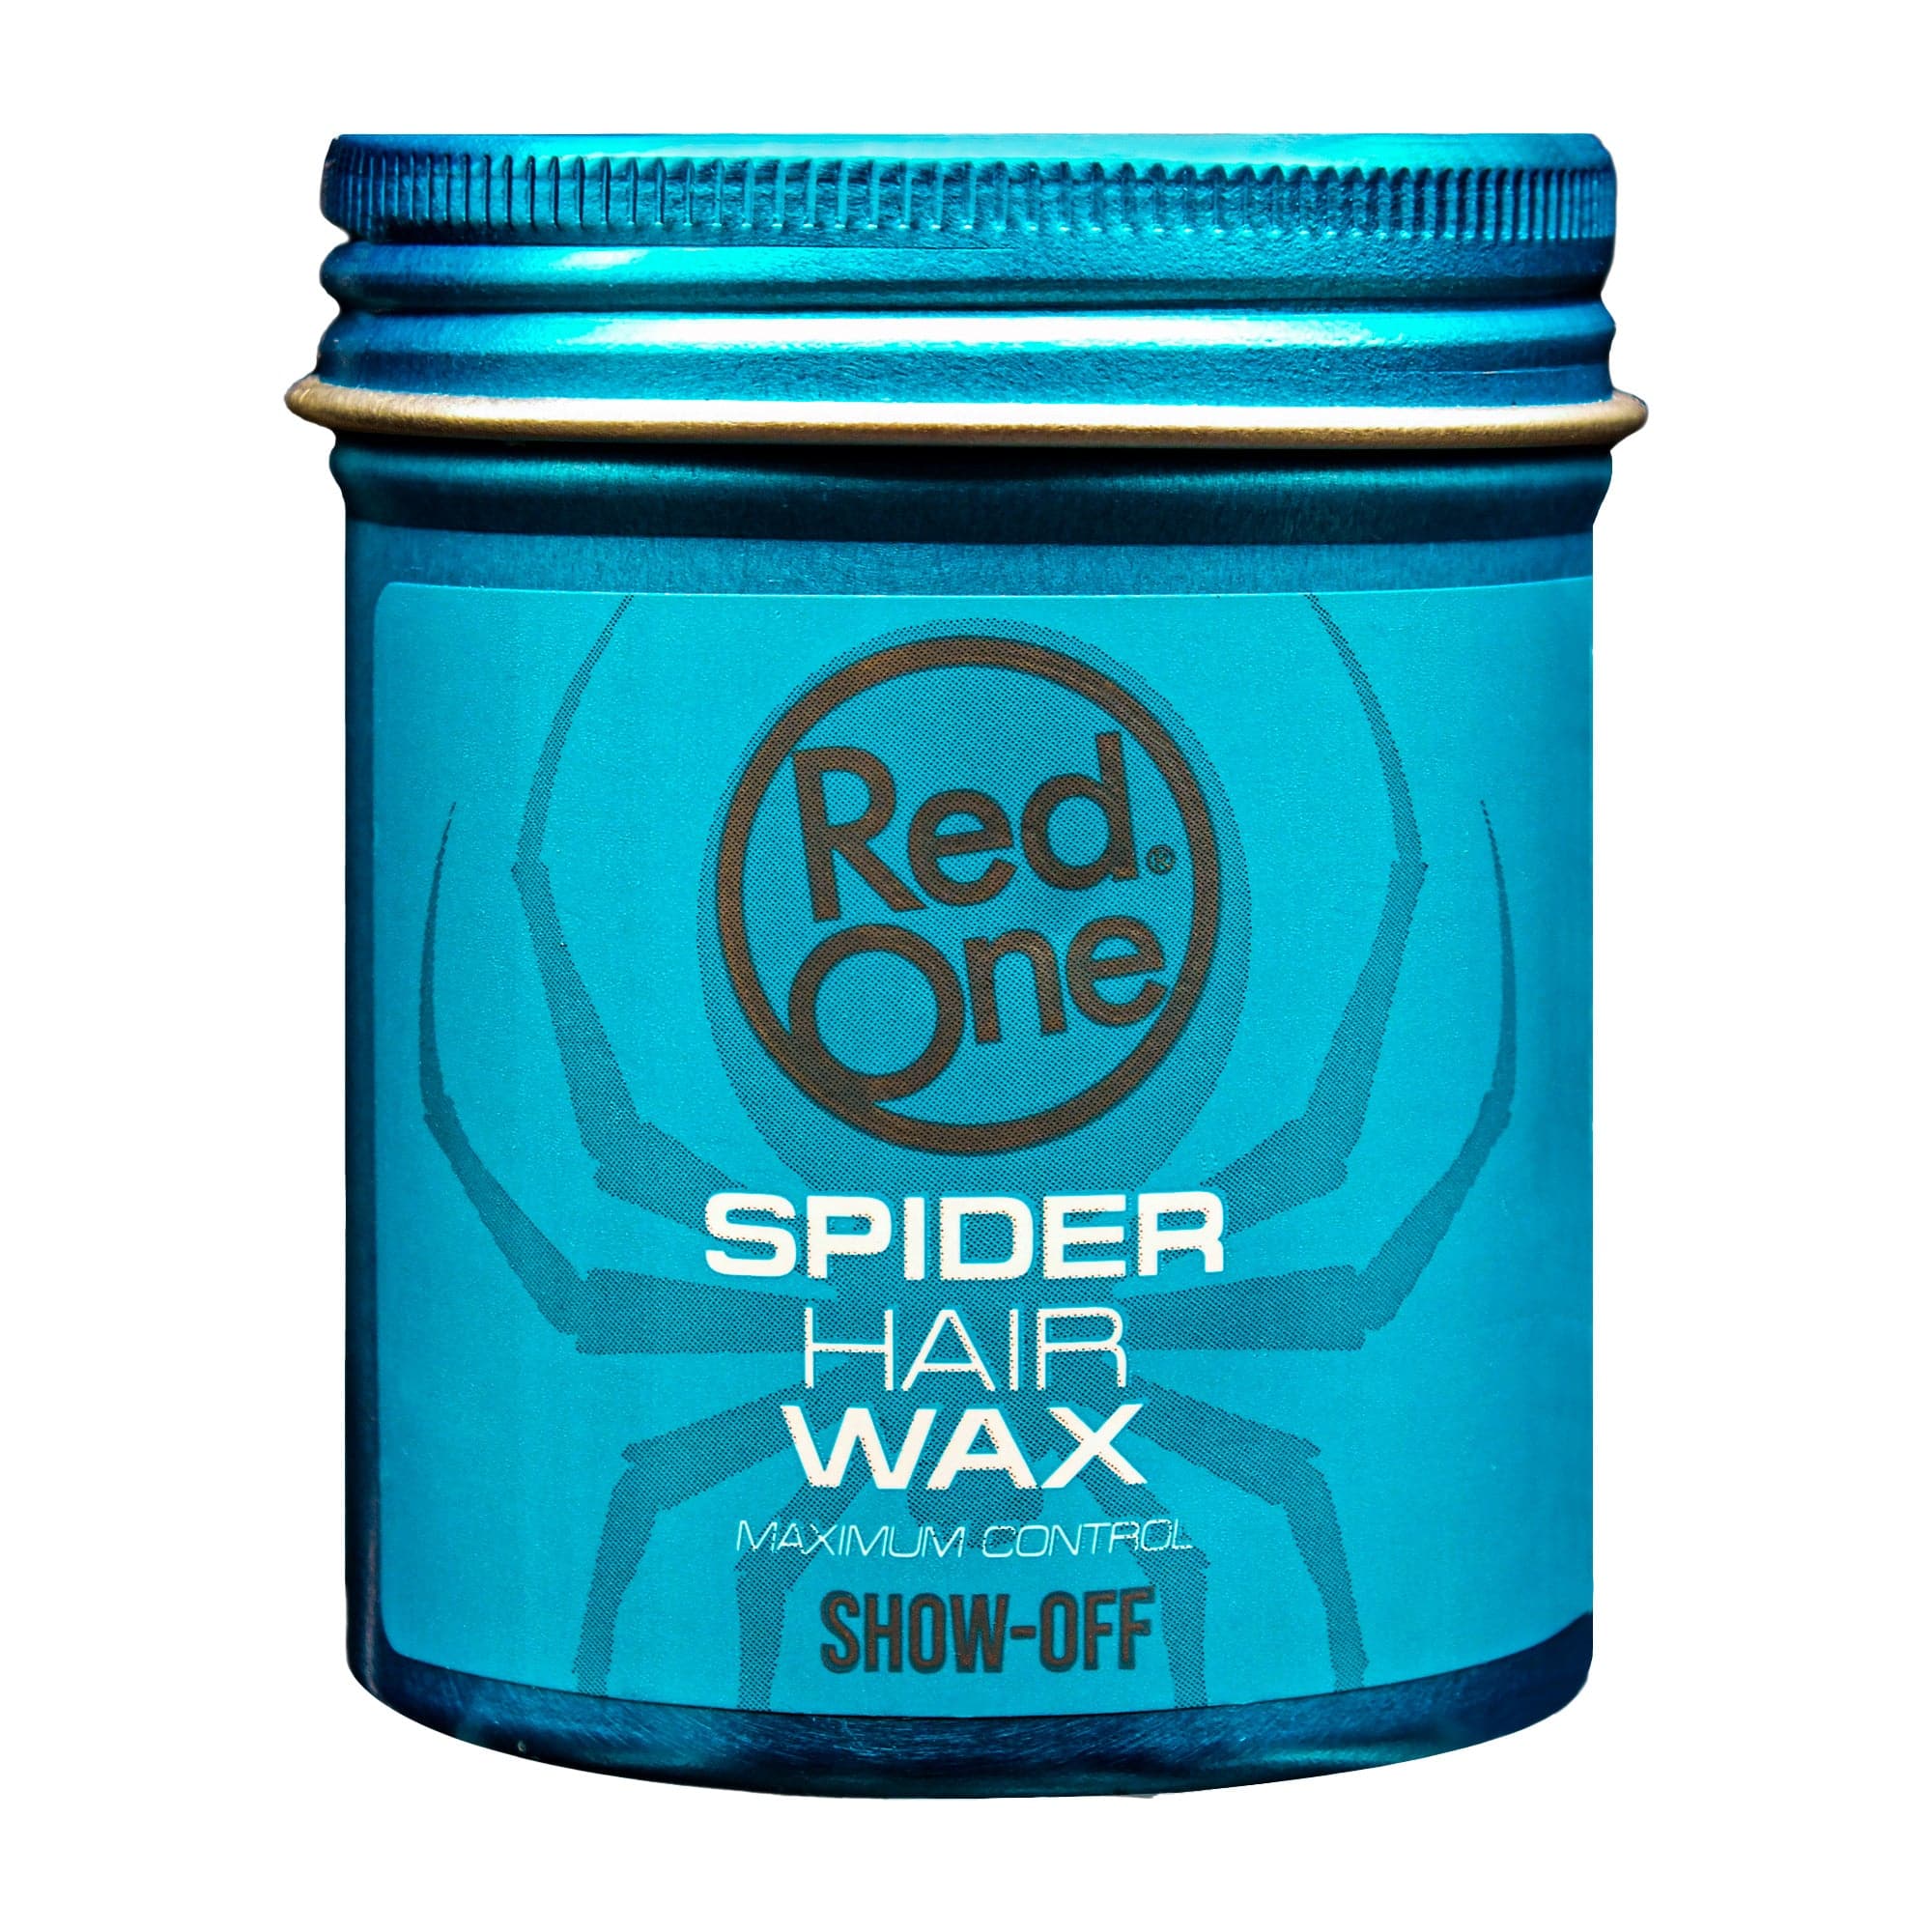 Redone - Spider Hair Wax Show-off Maximum Control 100ml